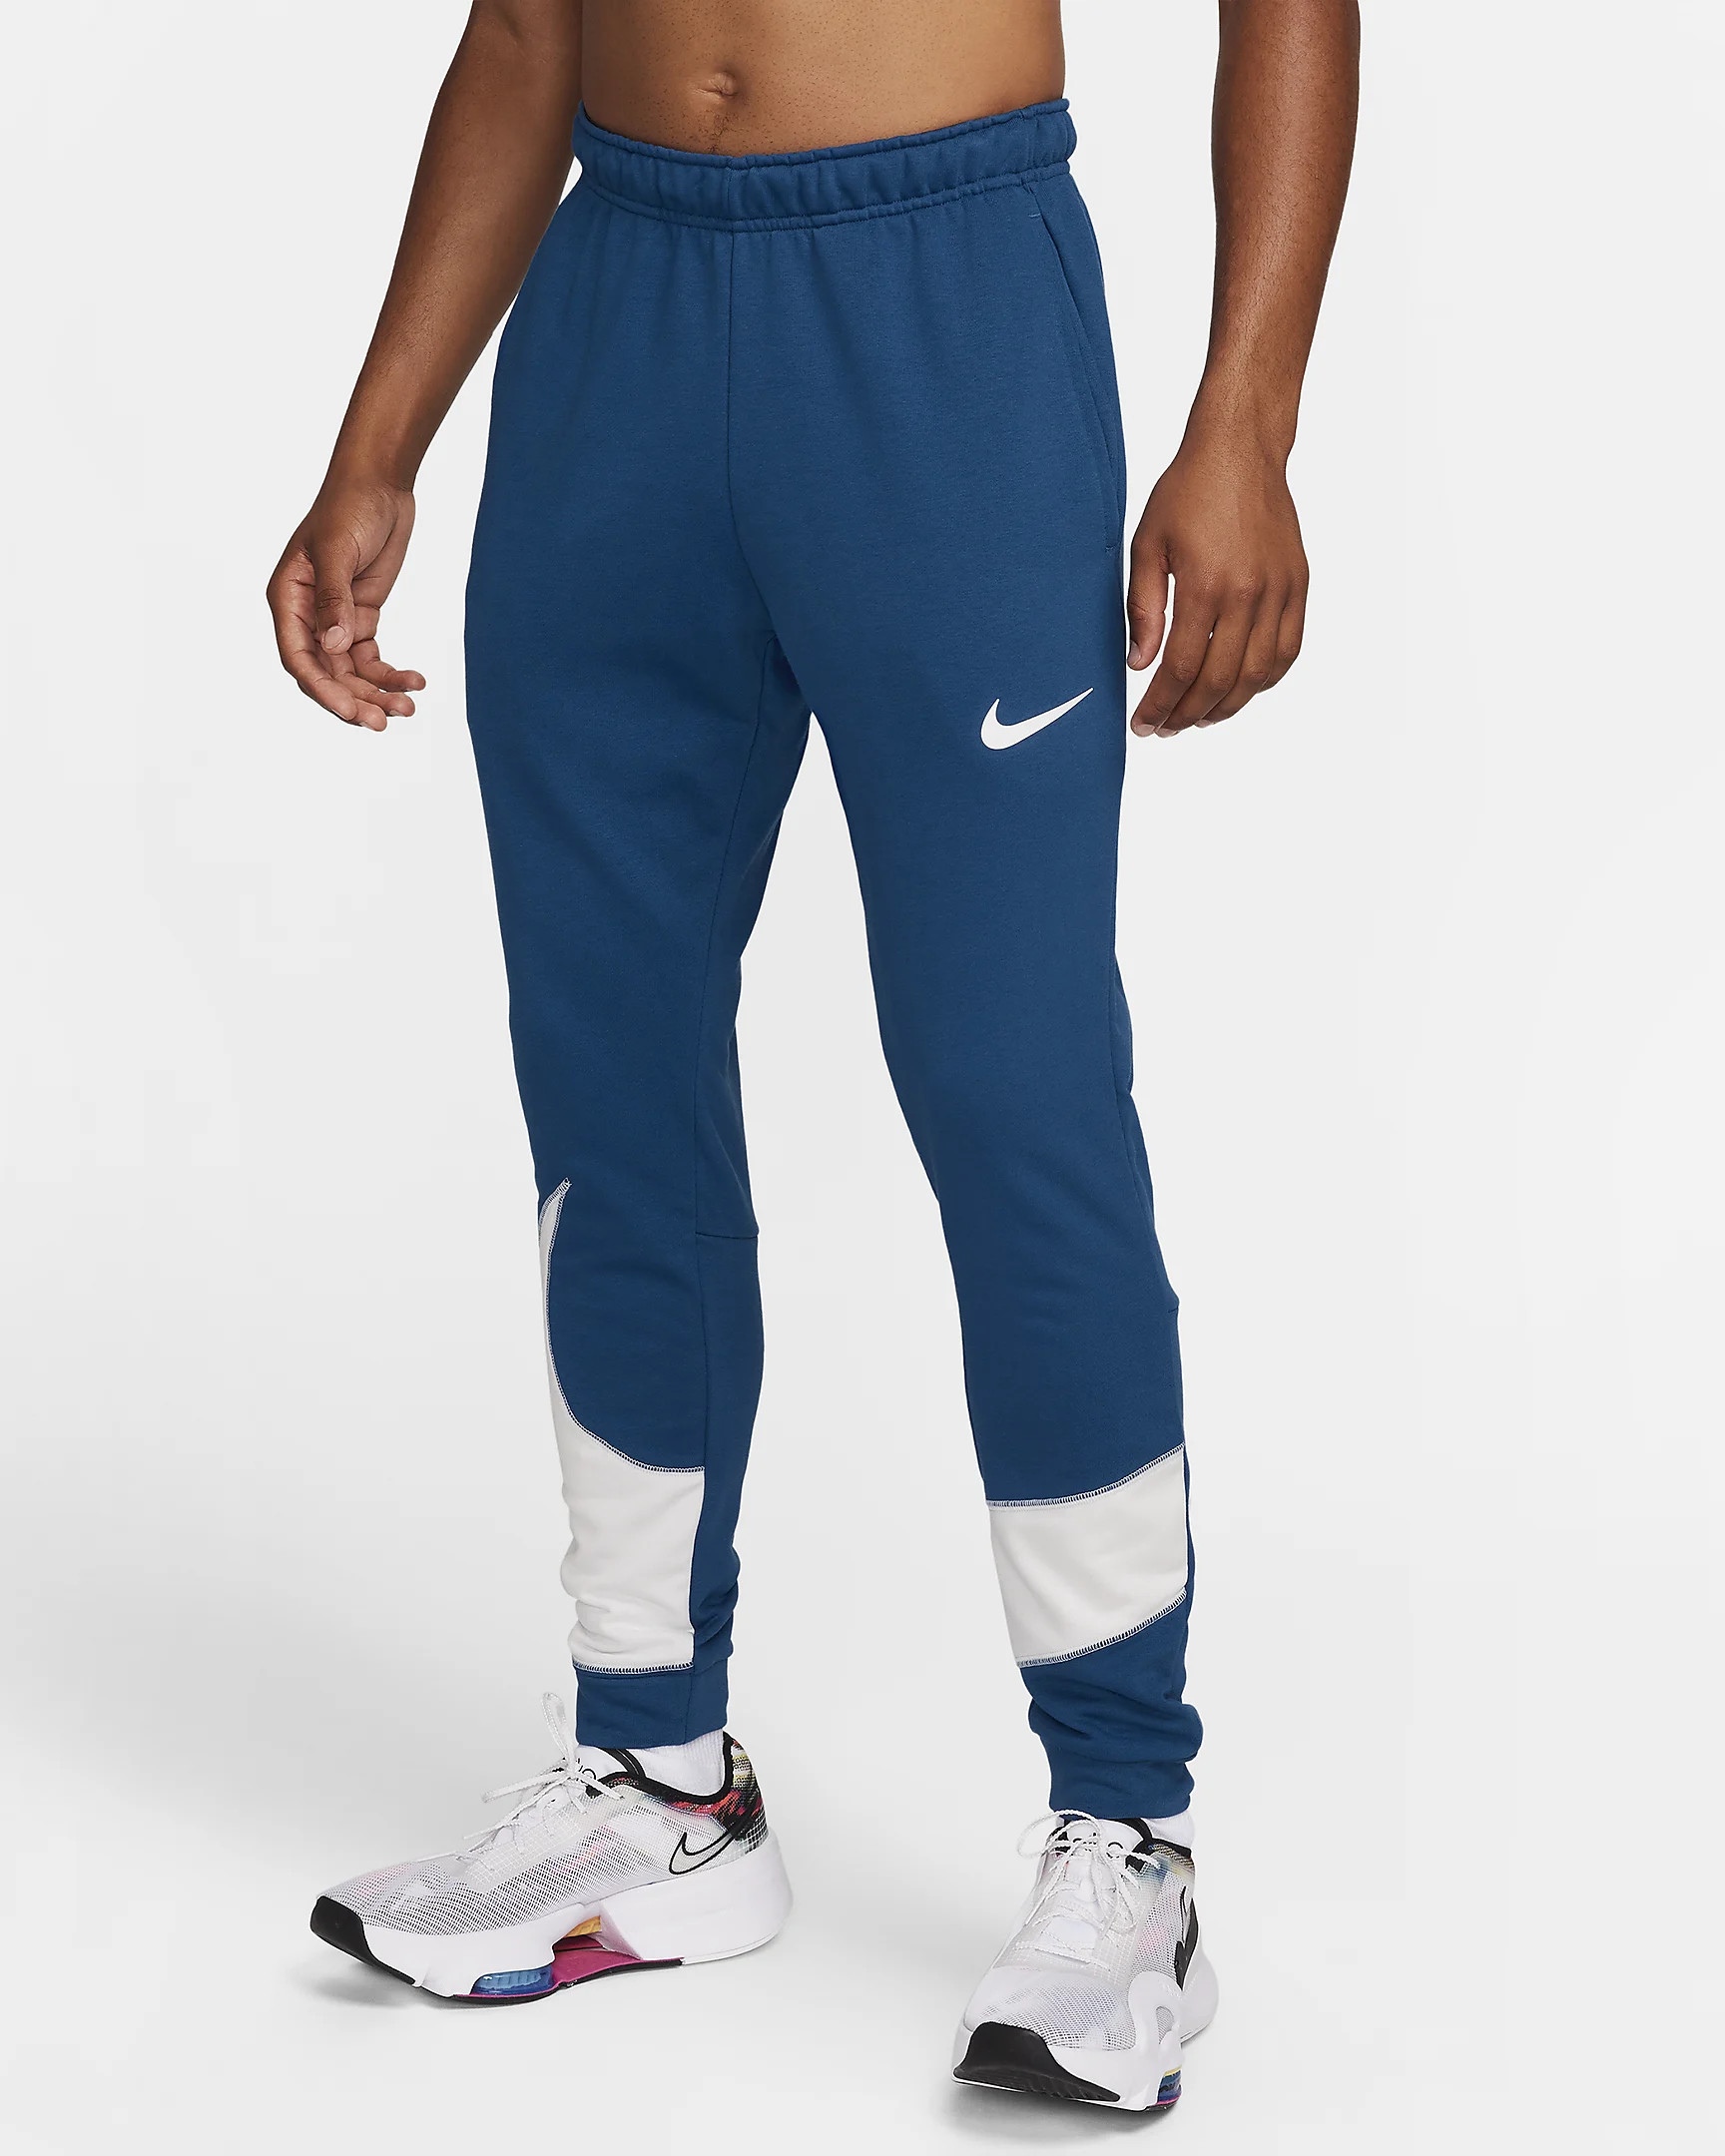  Pantaloni tuta Pants UOMO Nike Sportswear Taper Energy Blu